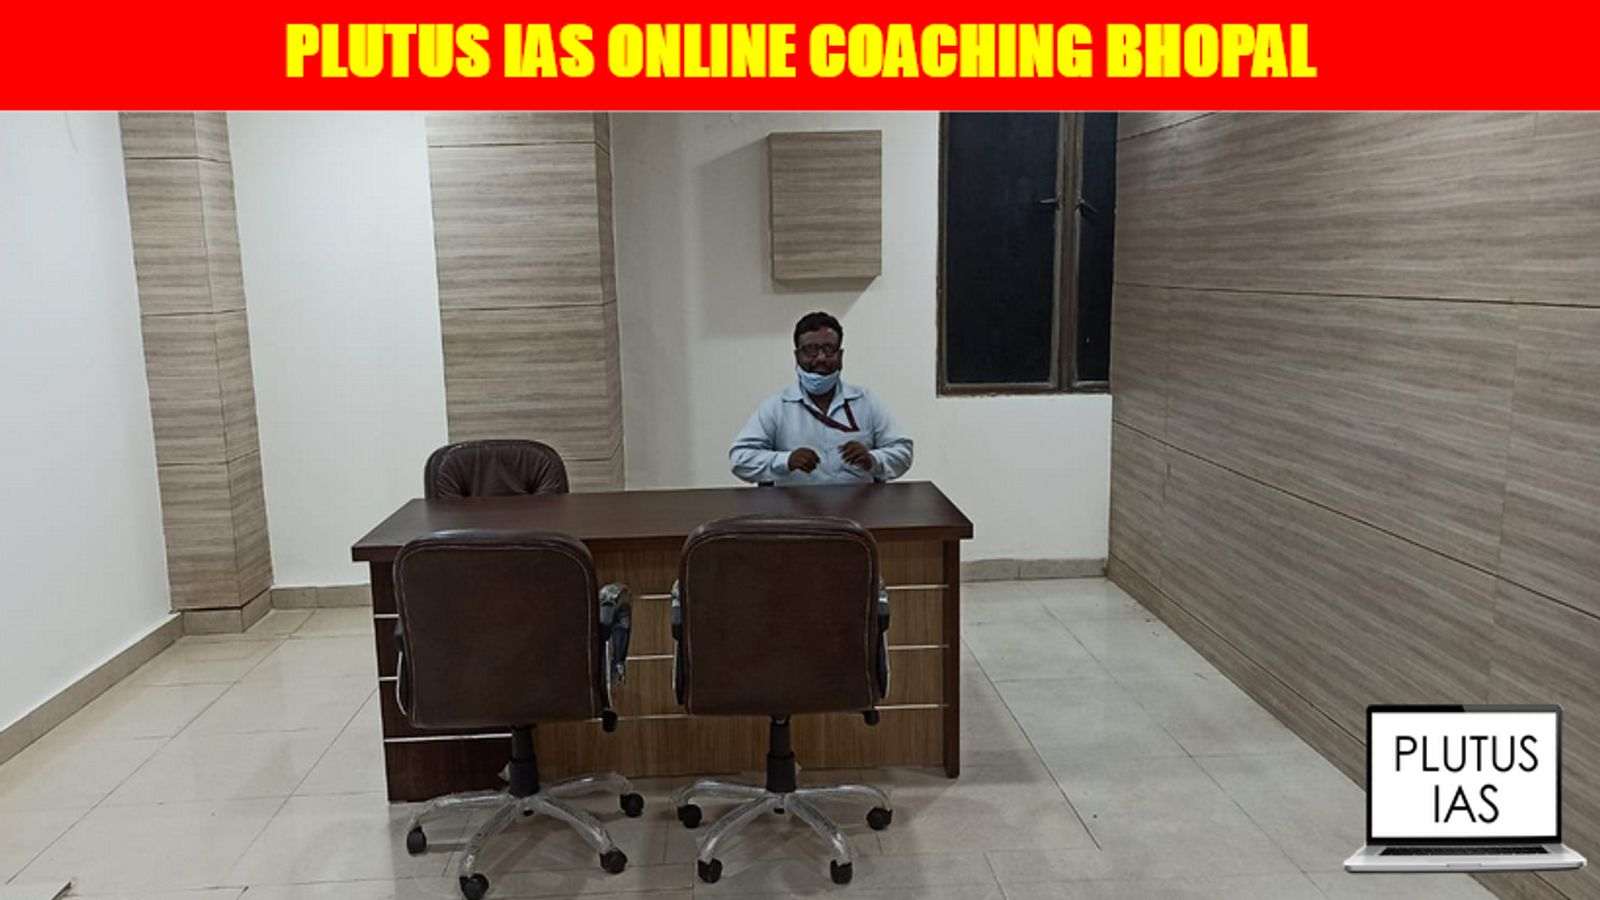 Plutus IAS Online Coaching Bhopal